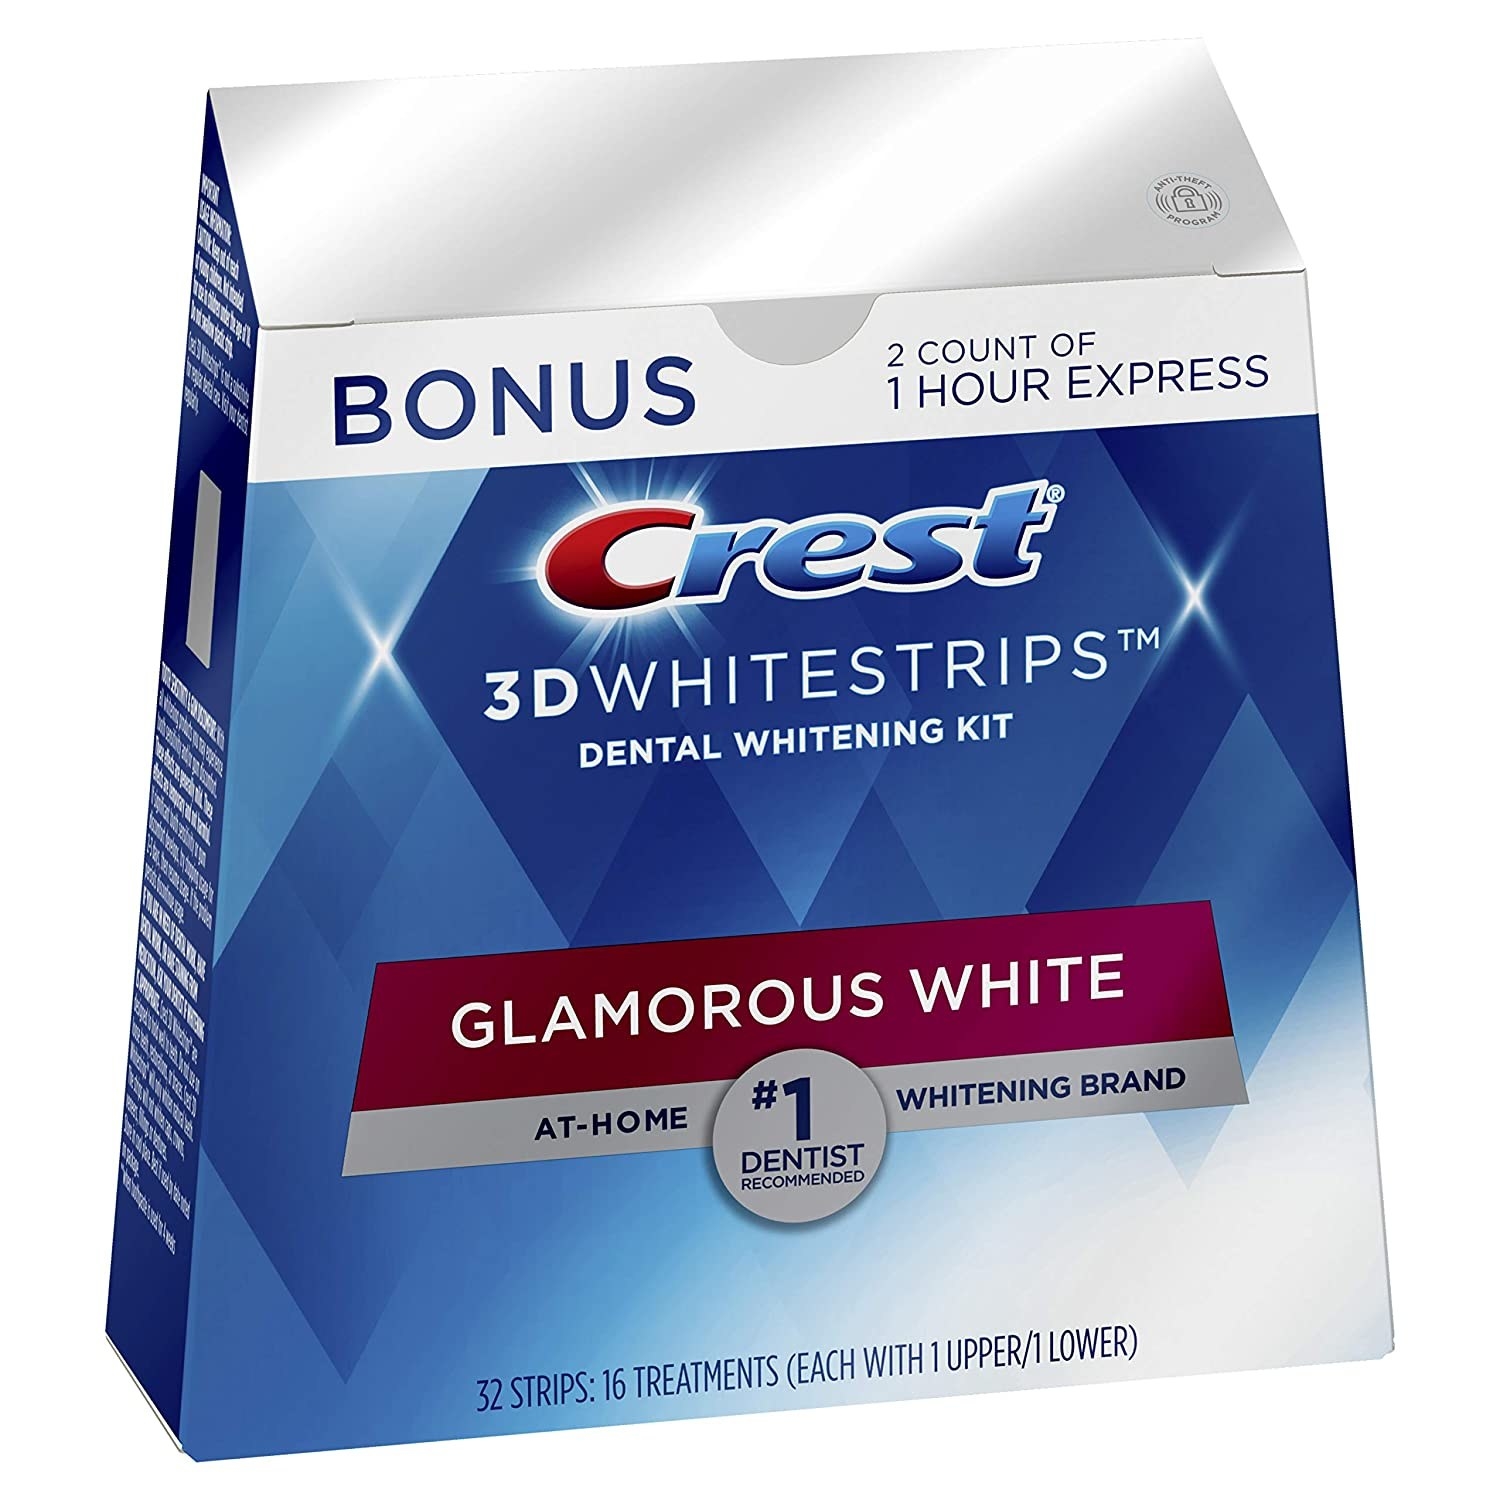 Box of Crest 3D Whitestrips Glamorous White